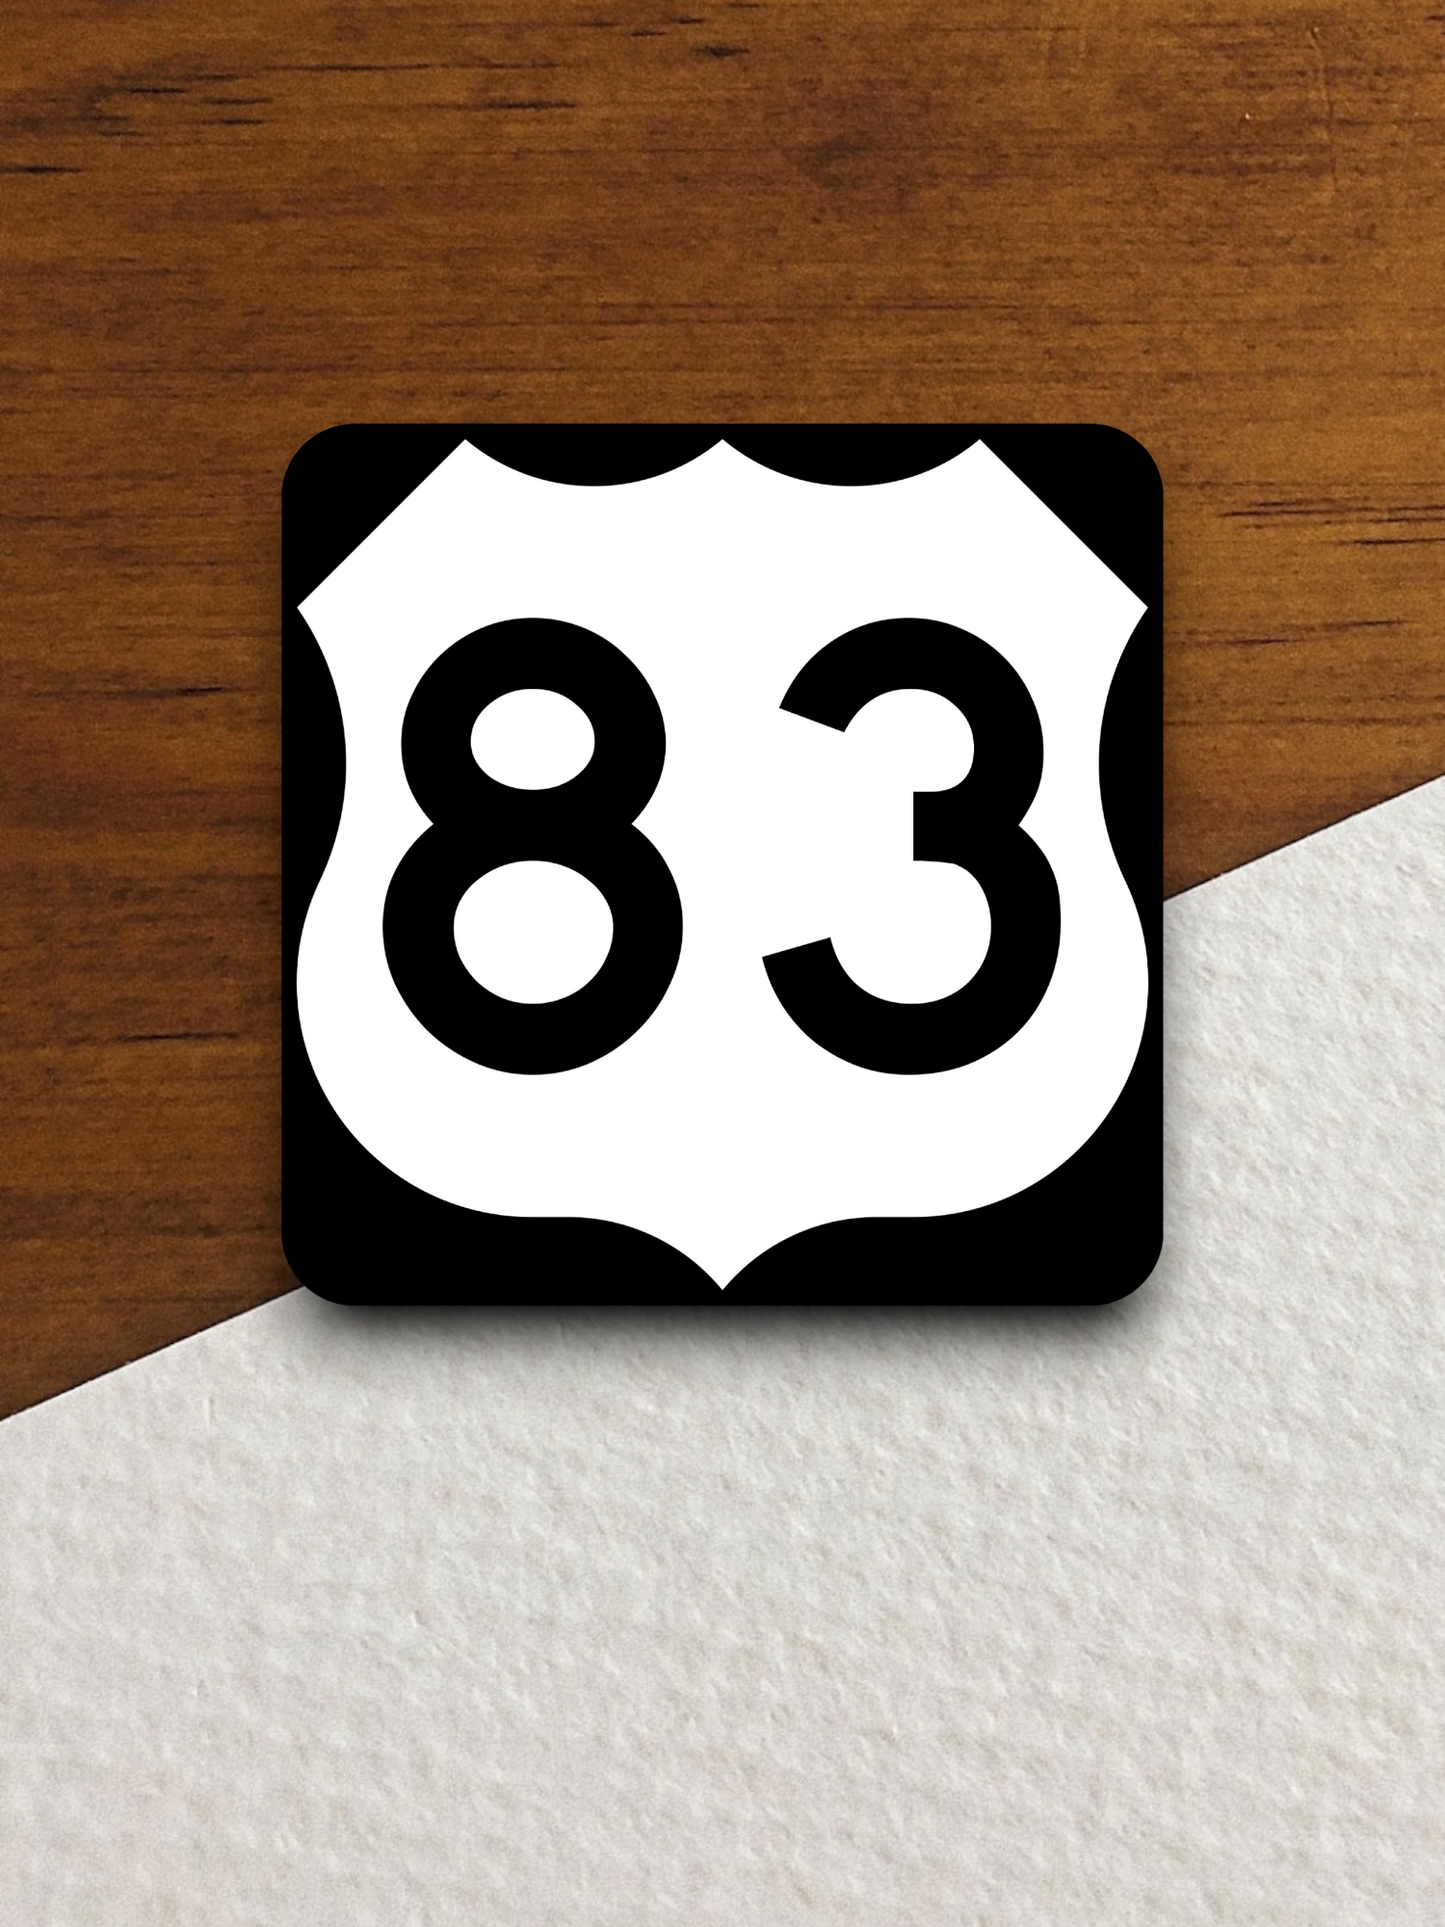 U.S. Route 83 Road Sign Sticker